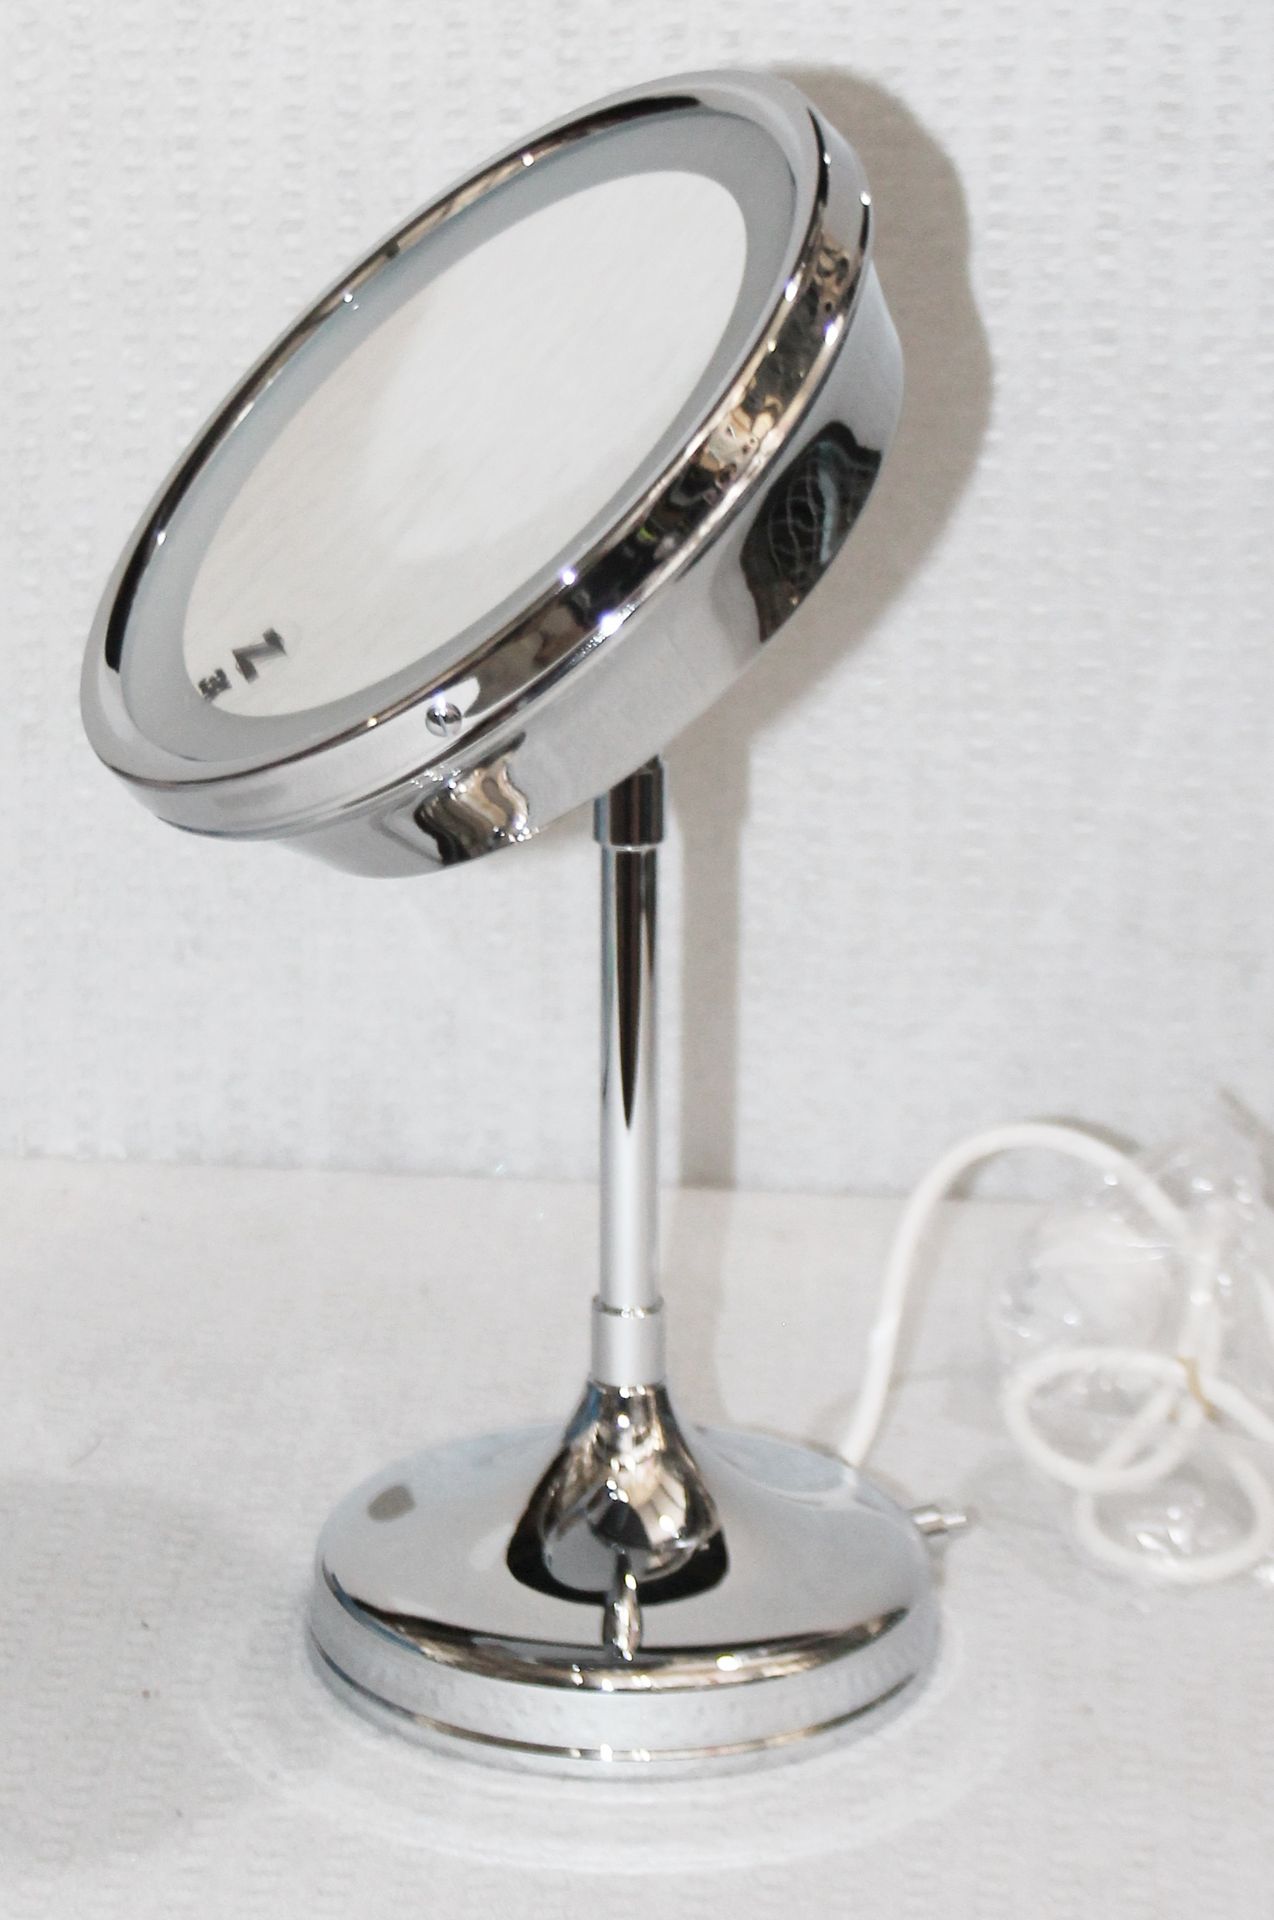 1 x ZODIAC Luxury Illuminated Stand Mirror Featuring 3x Magnification - Original Price £1,000 - Image 5 of 9